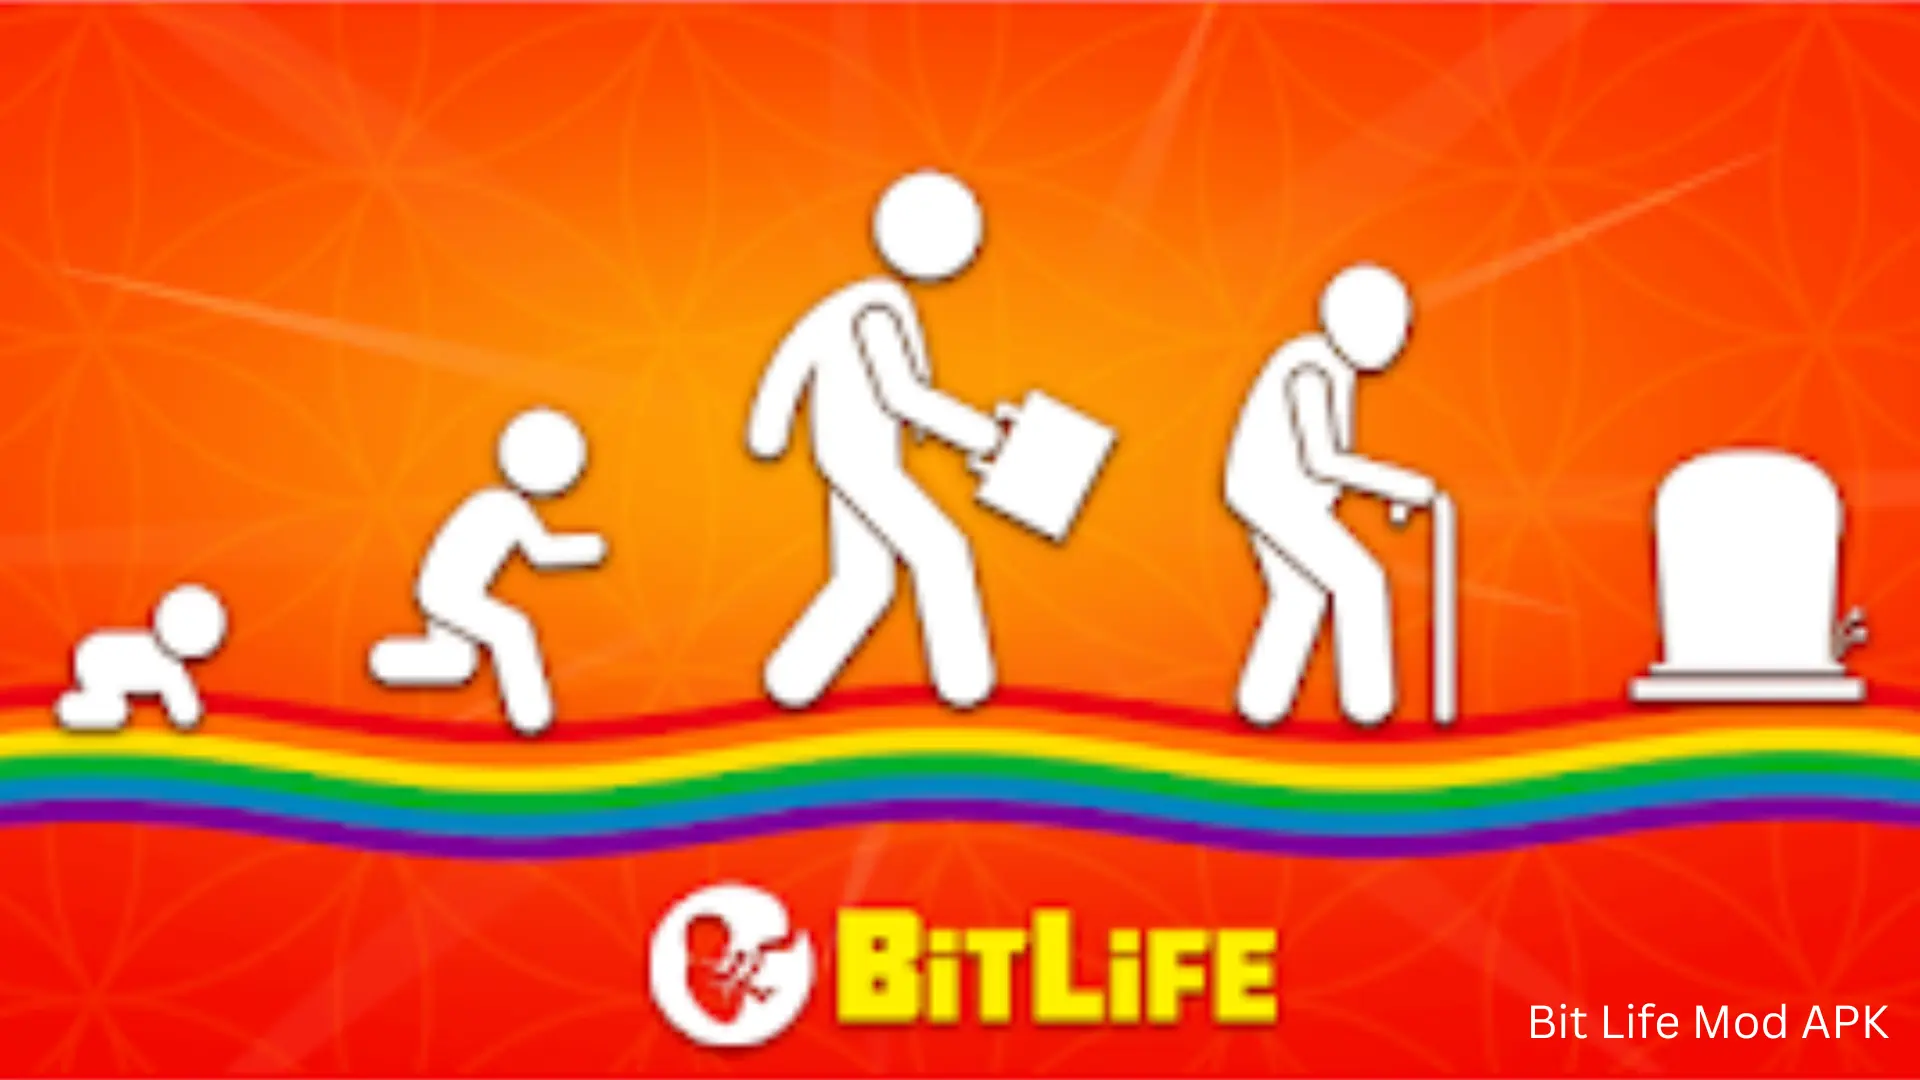 Bitlife Mod APK phase of Life with logo